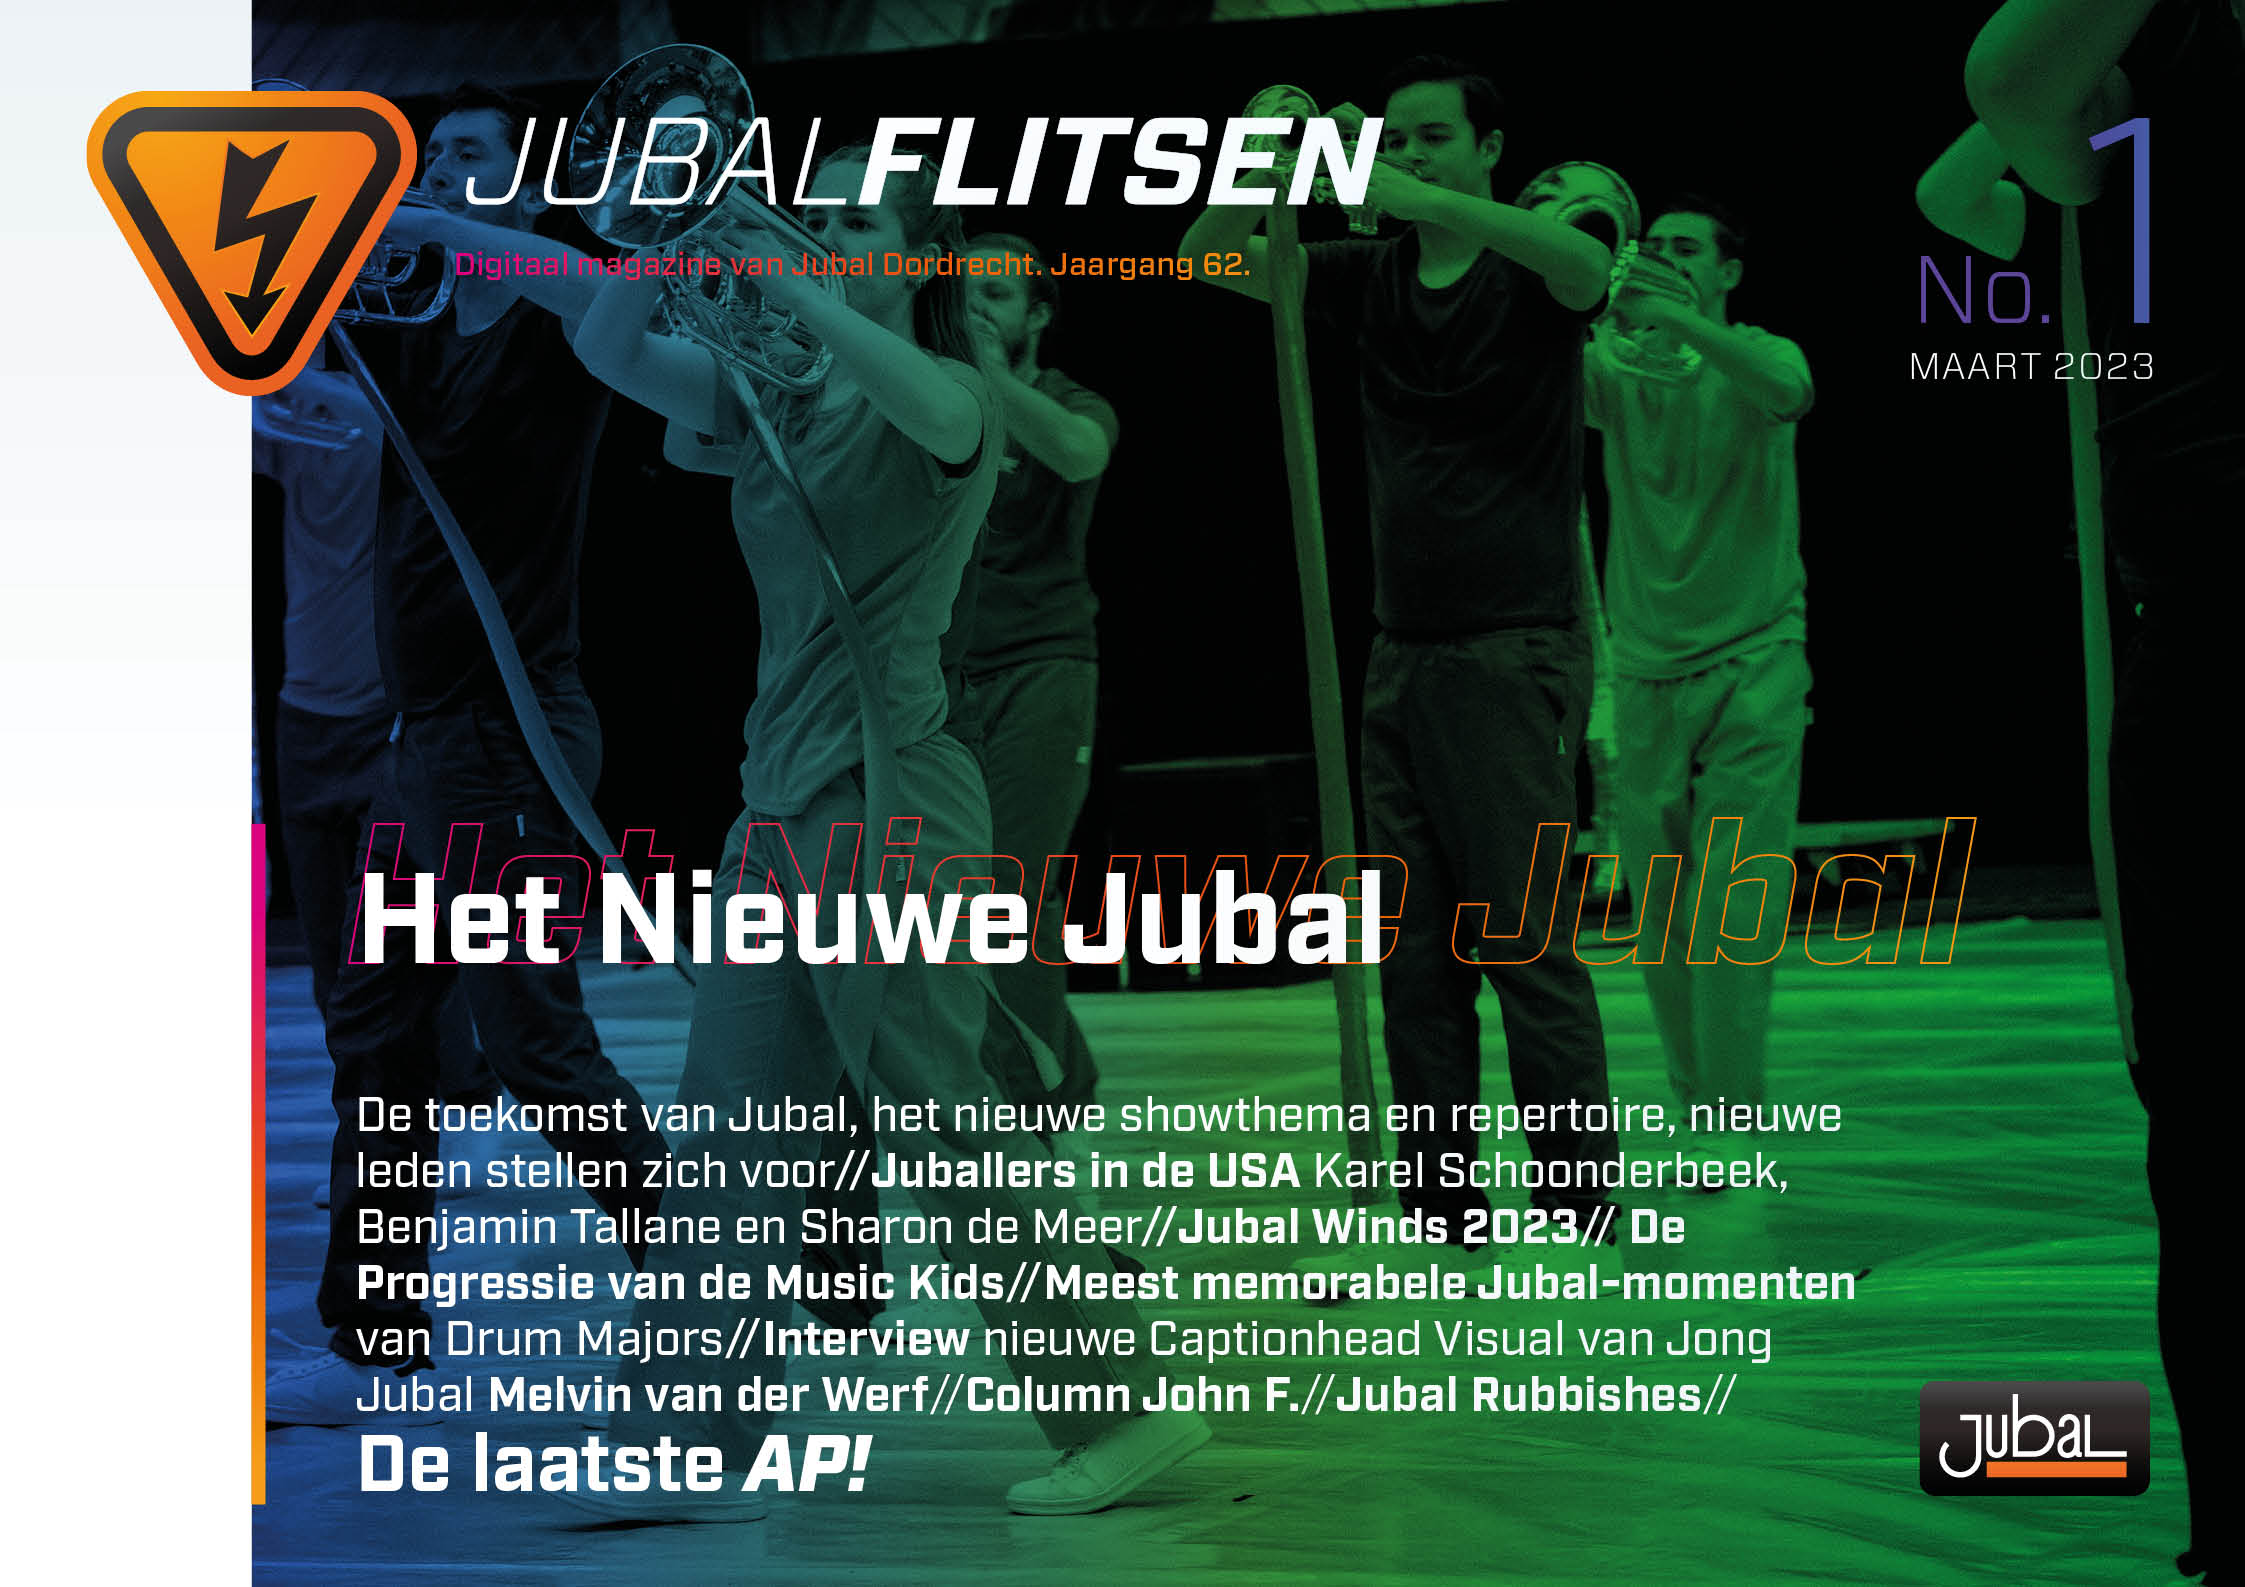 Jubal Flitsen 2023 No. 1 - Maart 2023